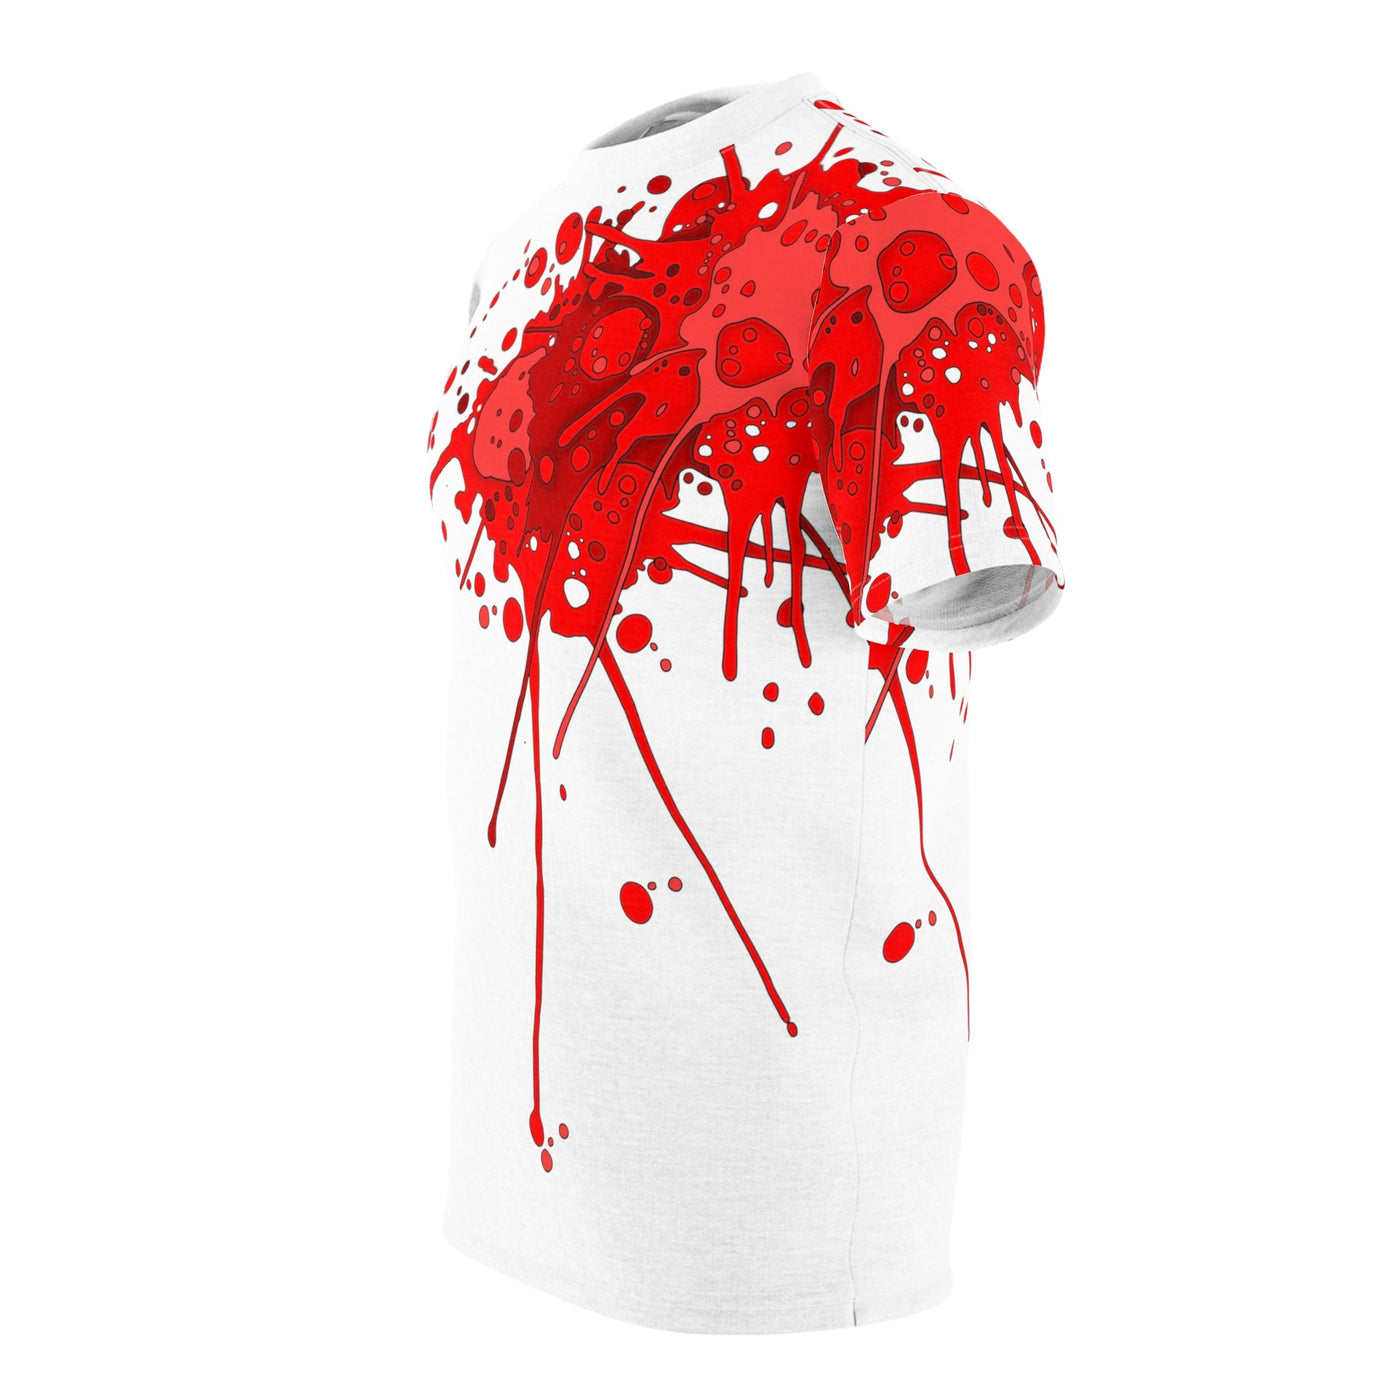 Sickstem Red Ink Splatter Splash T-shirt V2